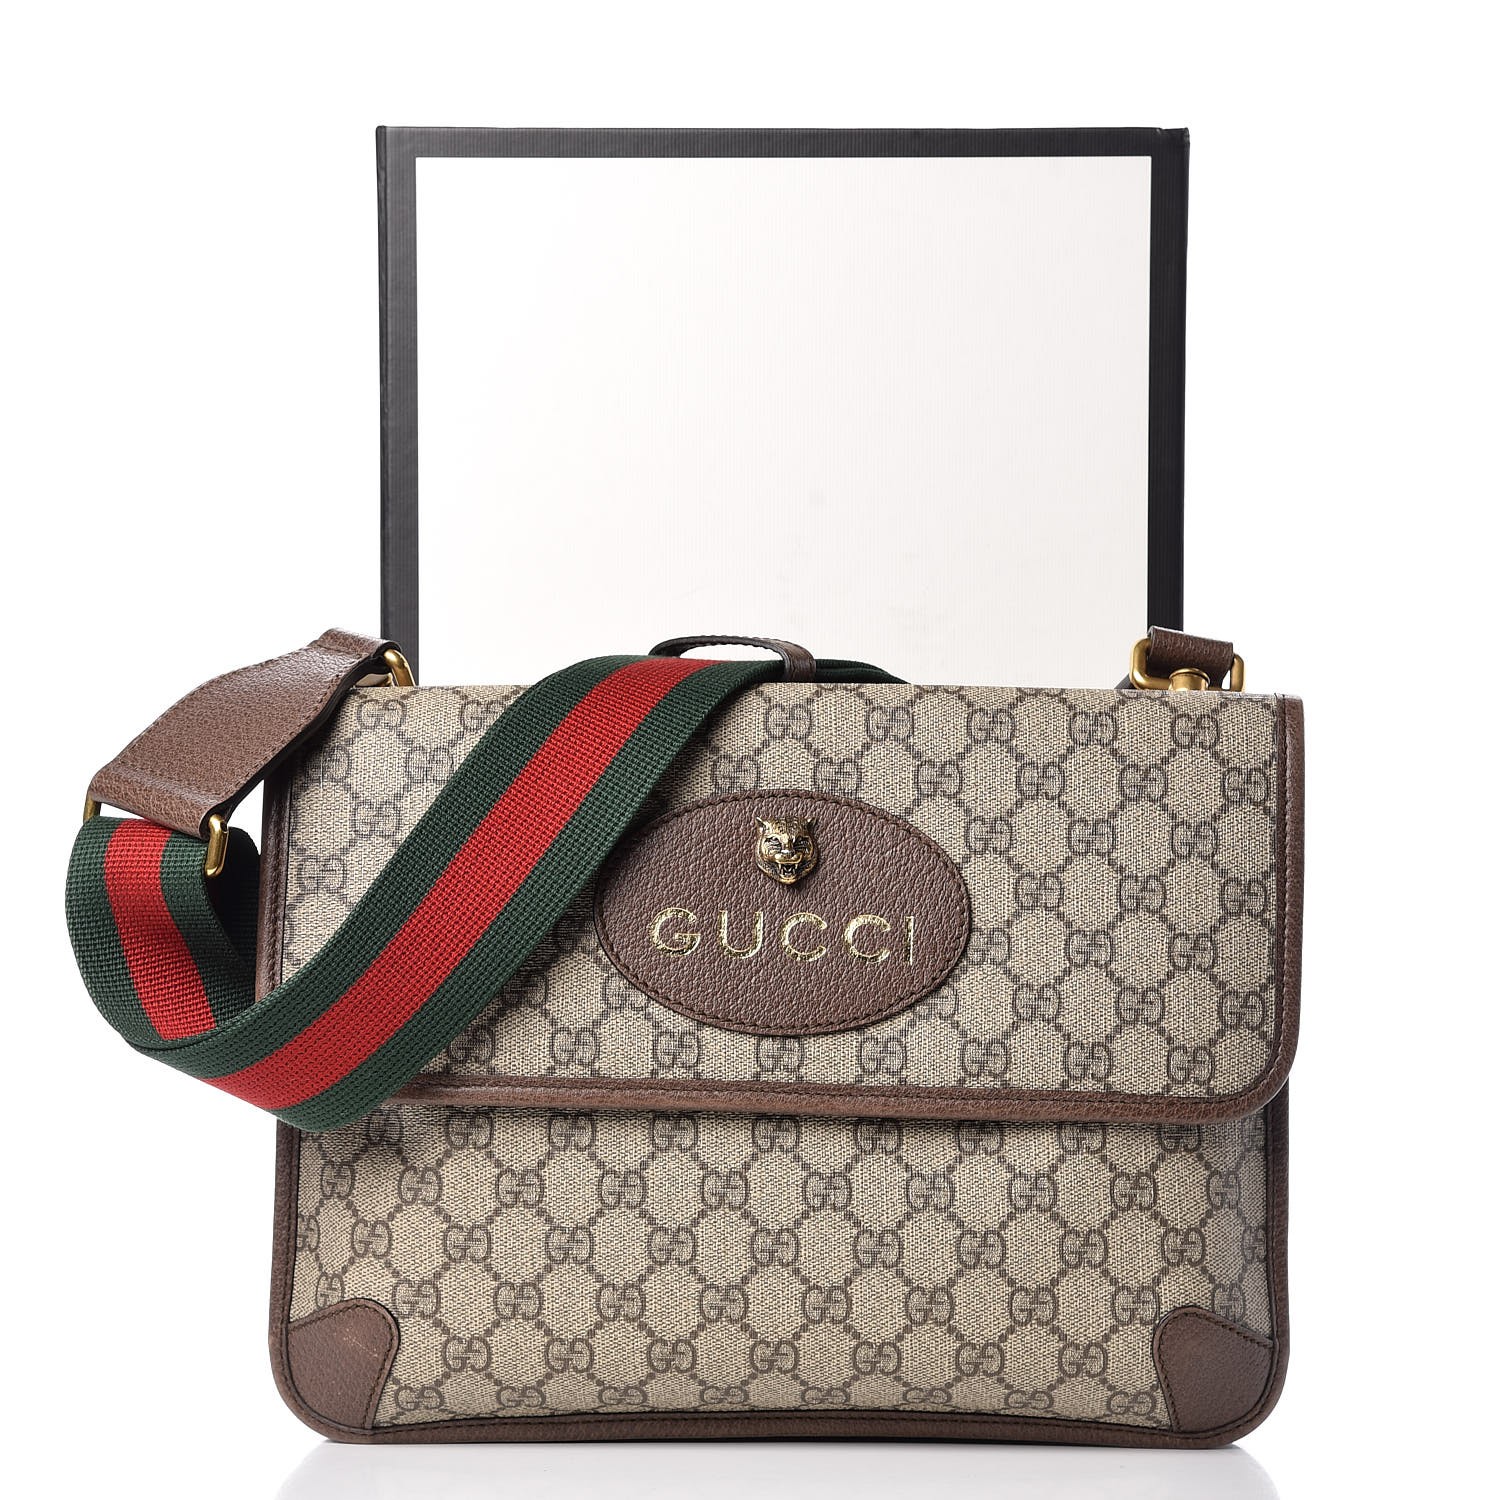 Gucci Neo Vintage Camera Bag | NAR Media Kit